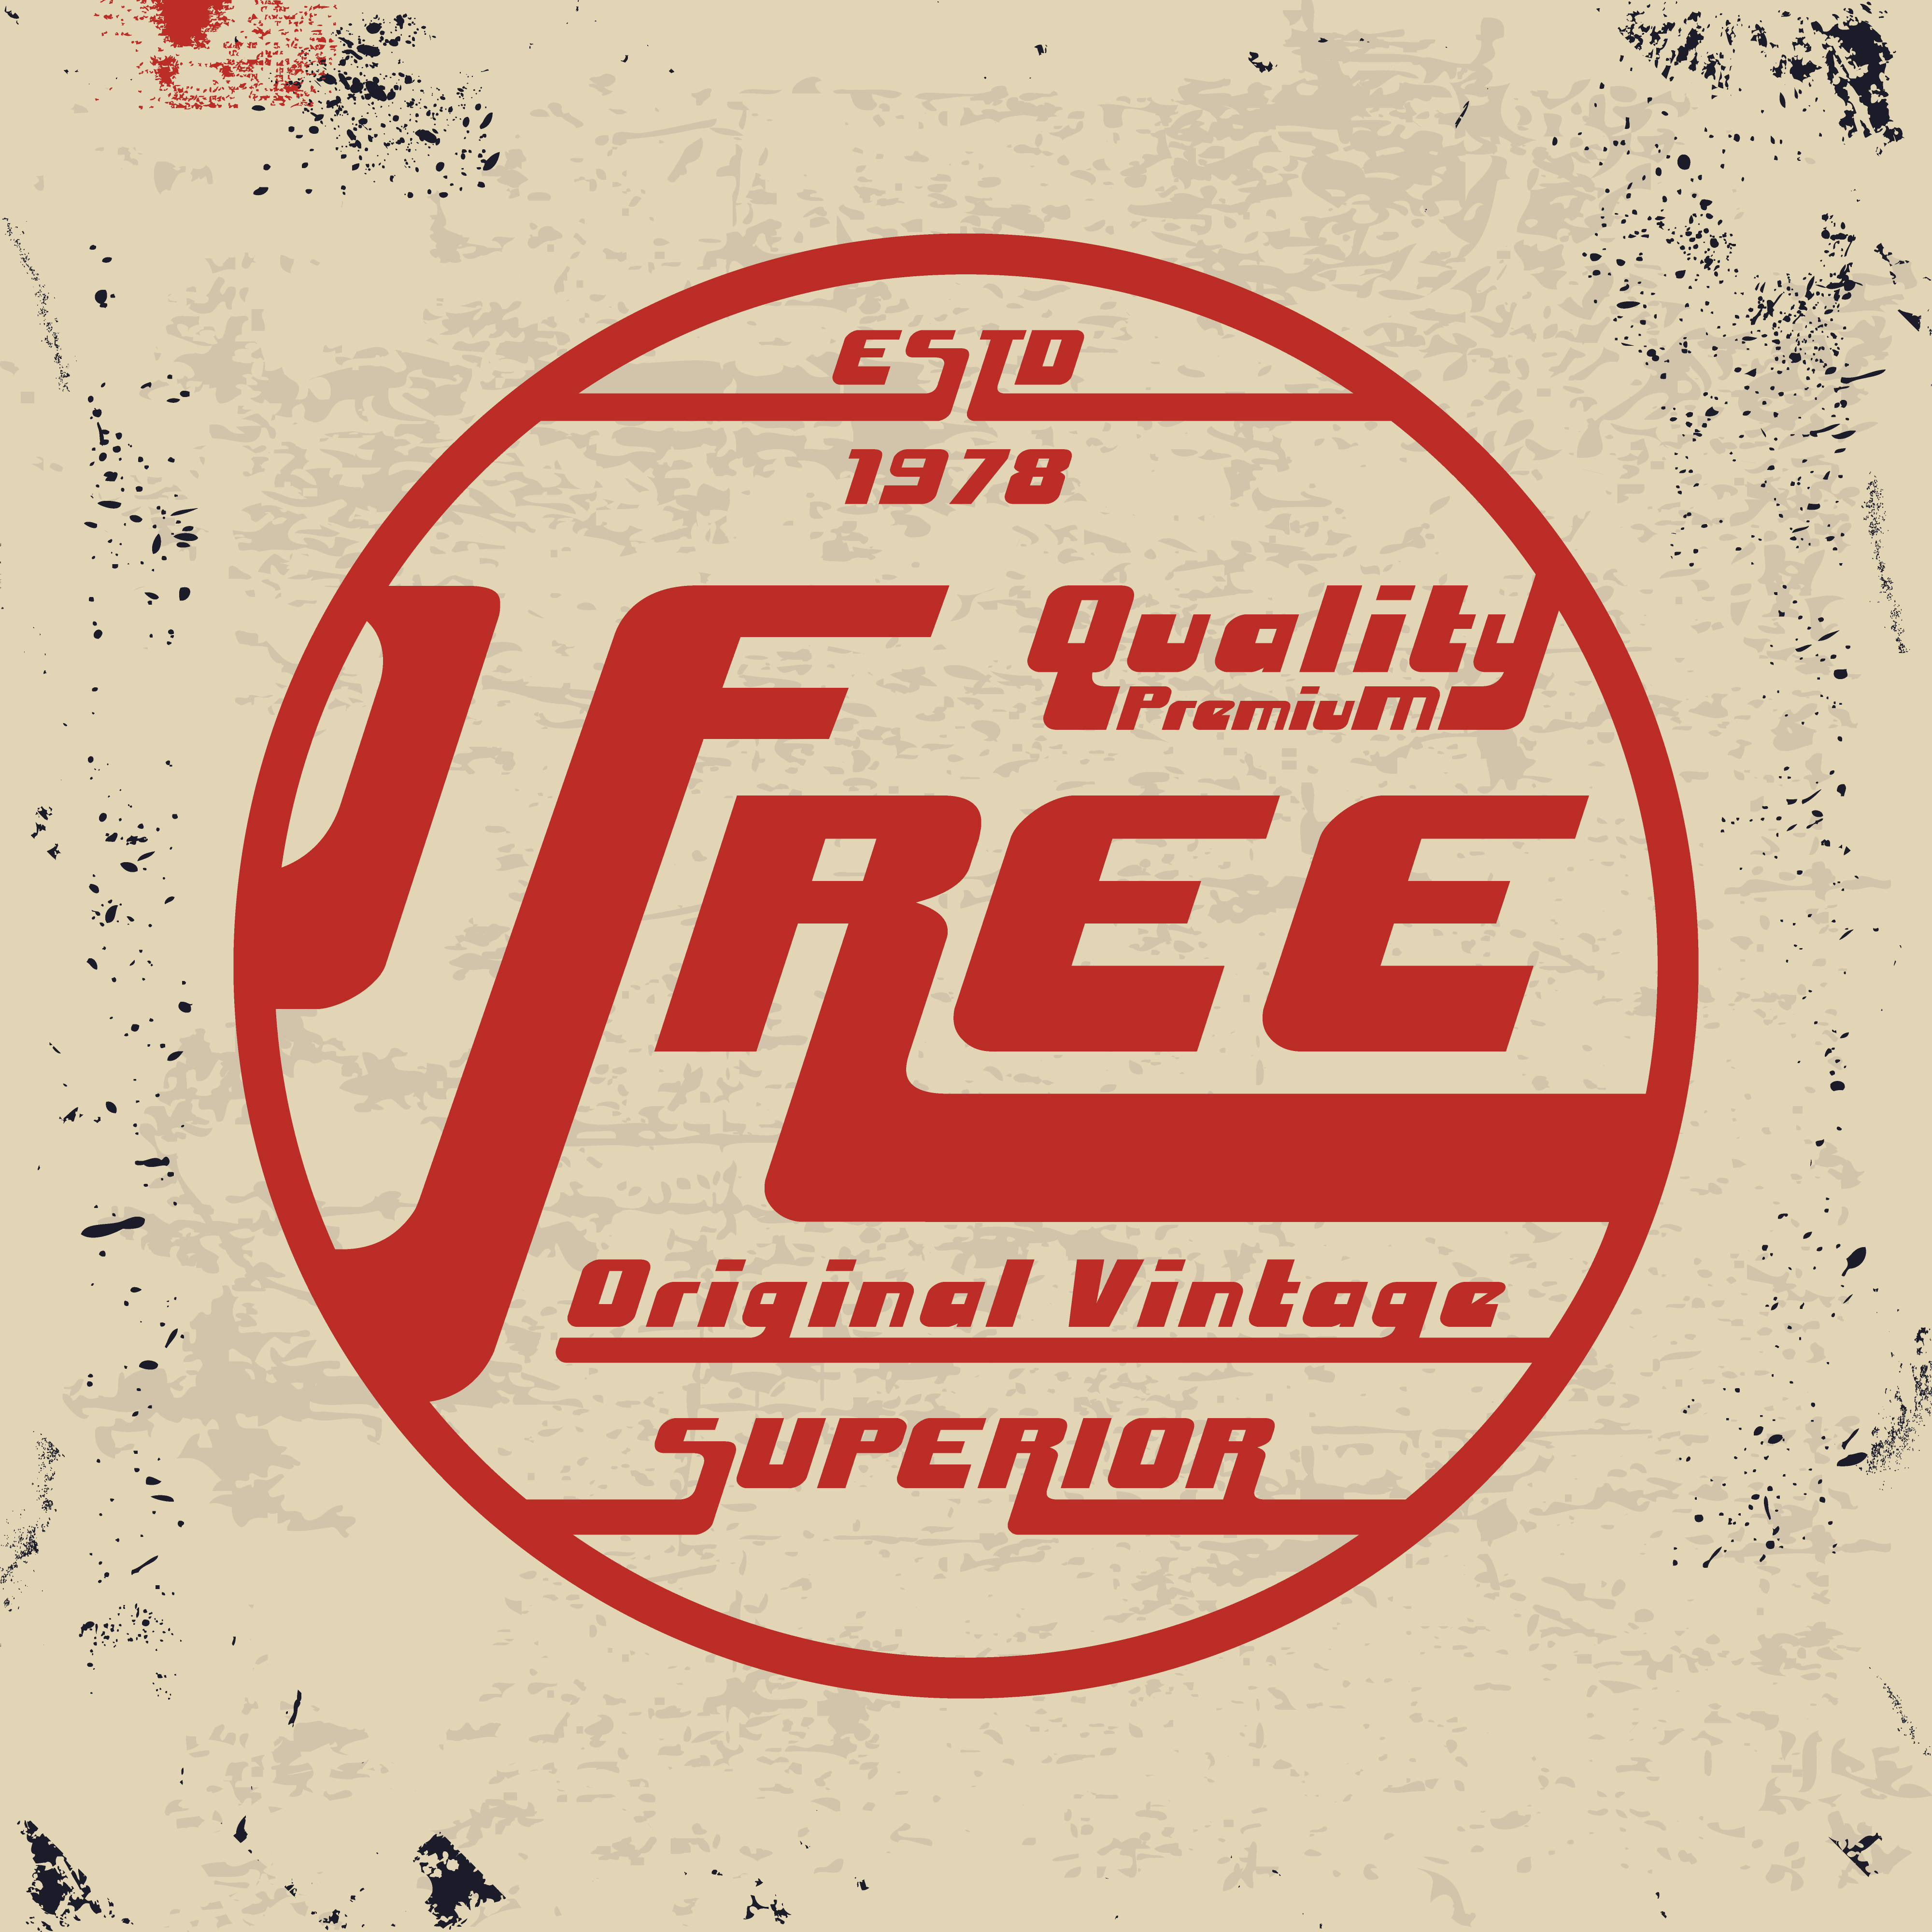 Download Free vintage stamp - Download Free Vectors, Clipart Graphics & Vector Art